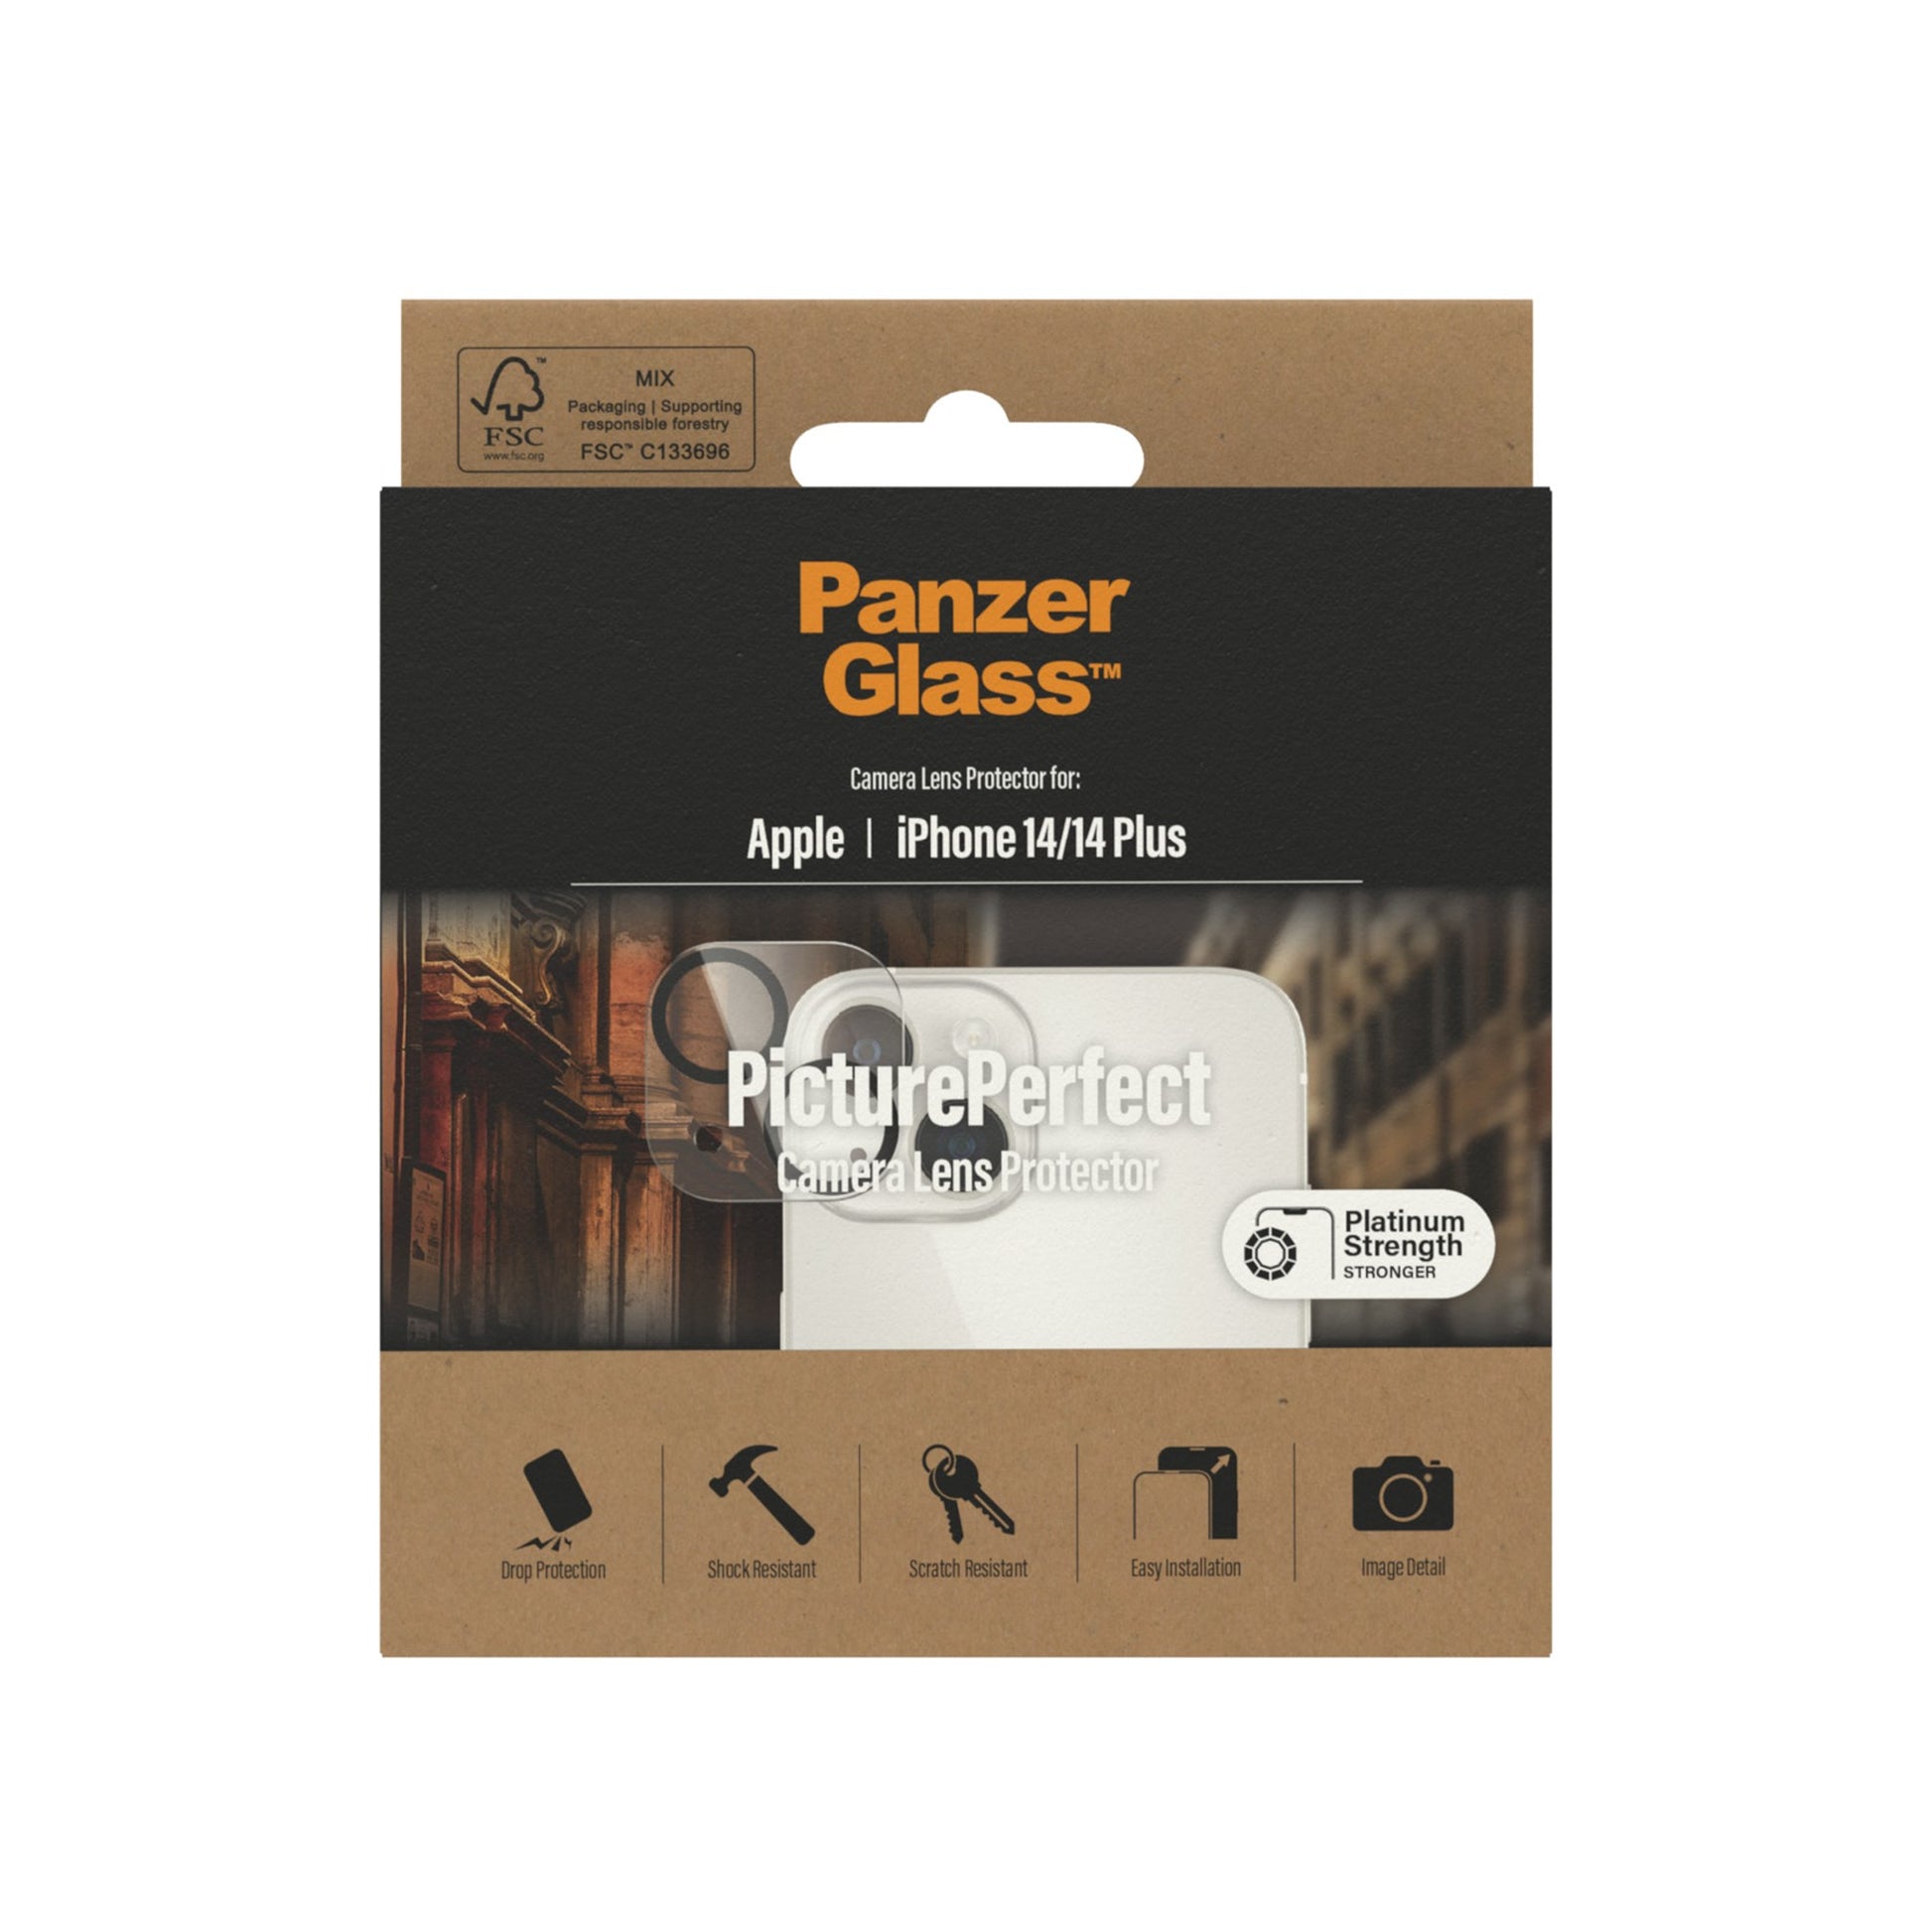 PanzerGlass™ PicturePerfect Camera Lens Protector Apple iPhone 14 | 14 Plus 3